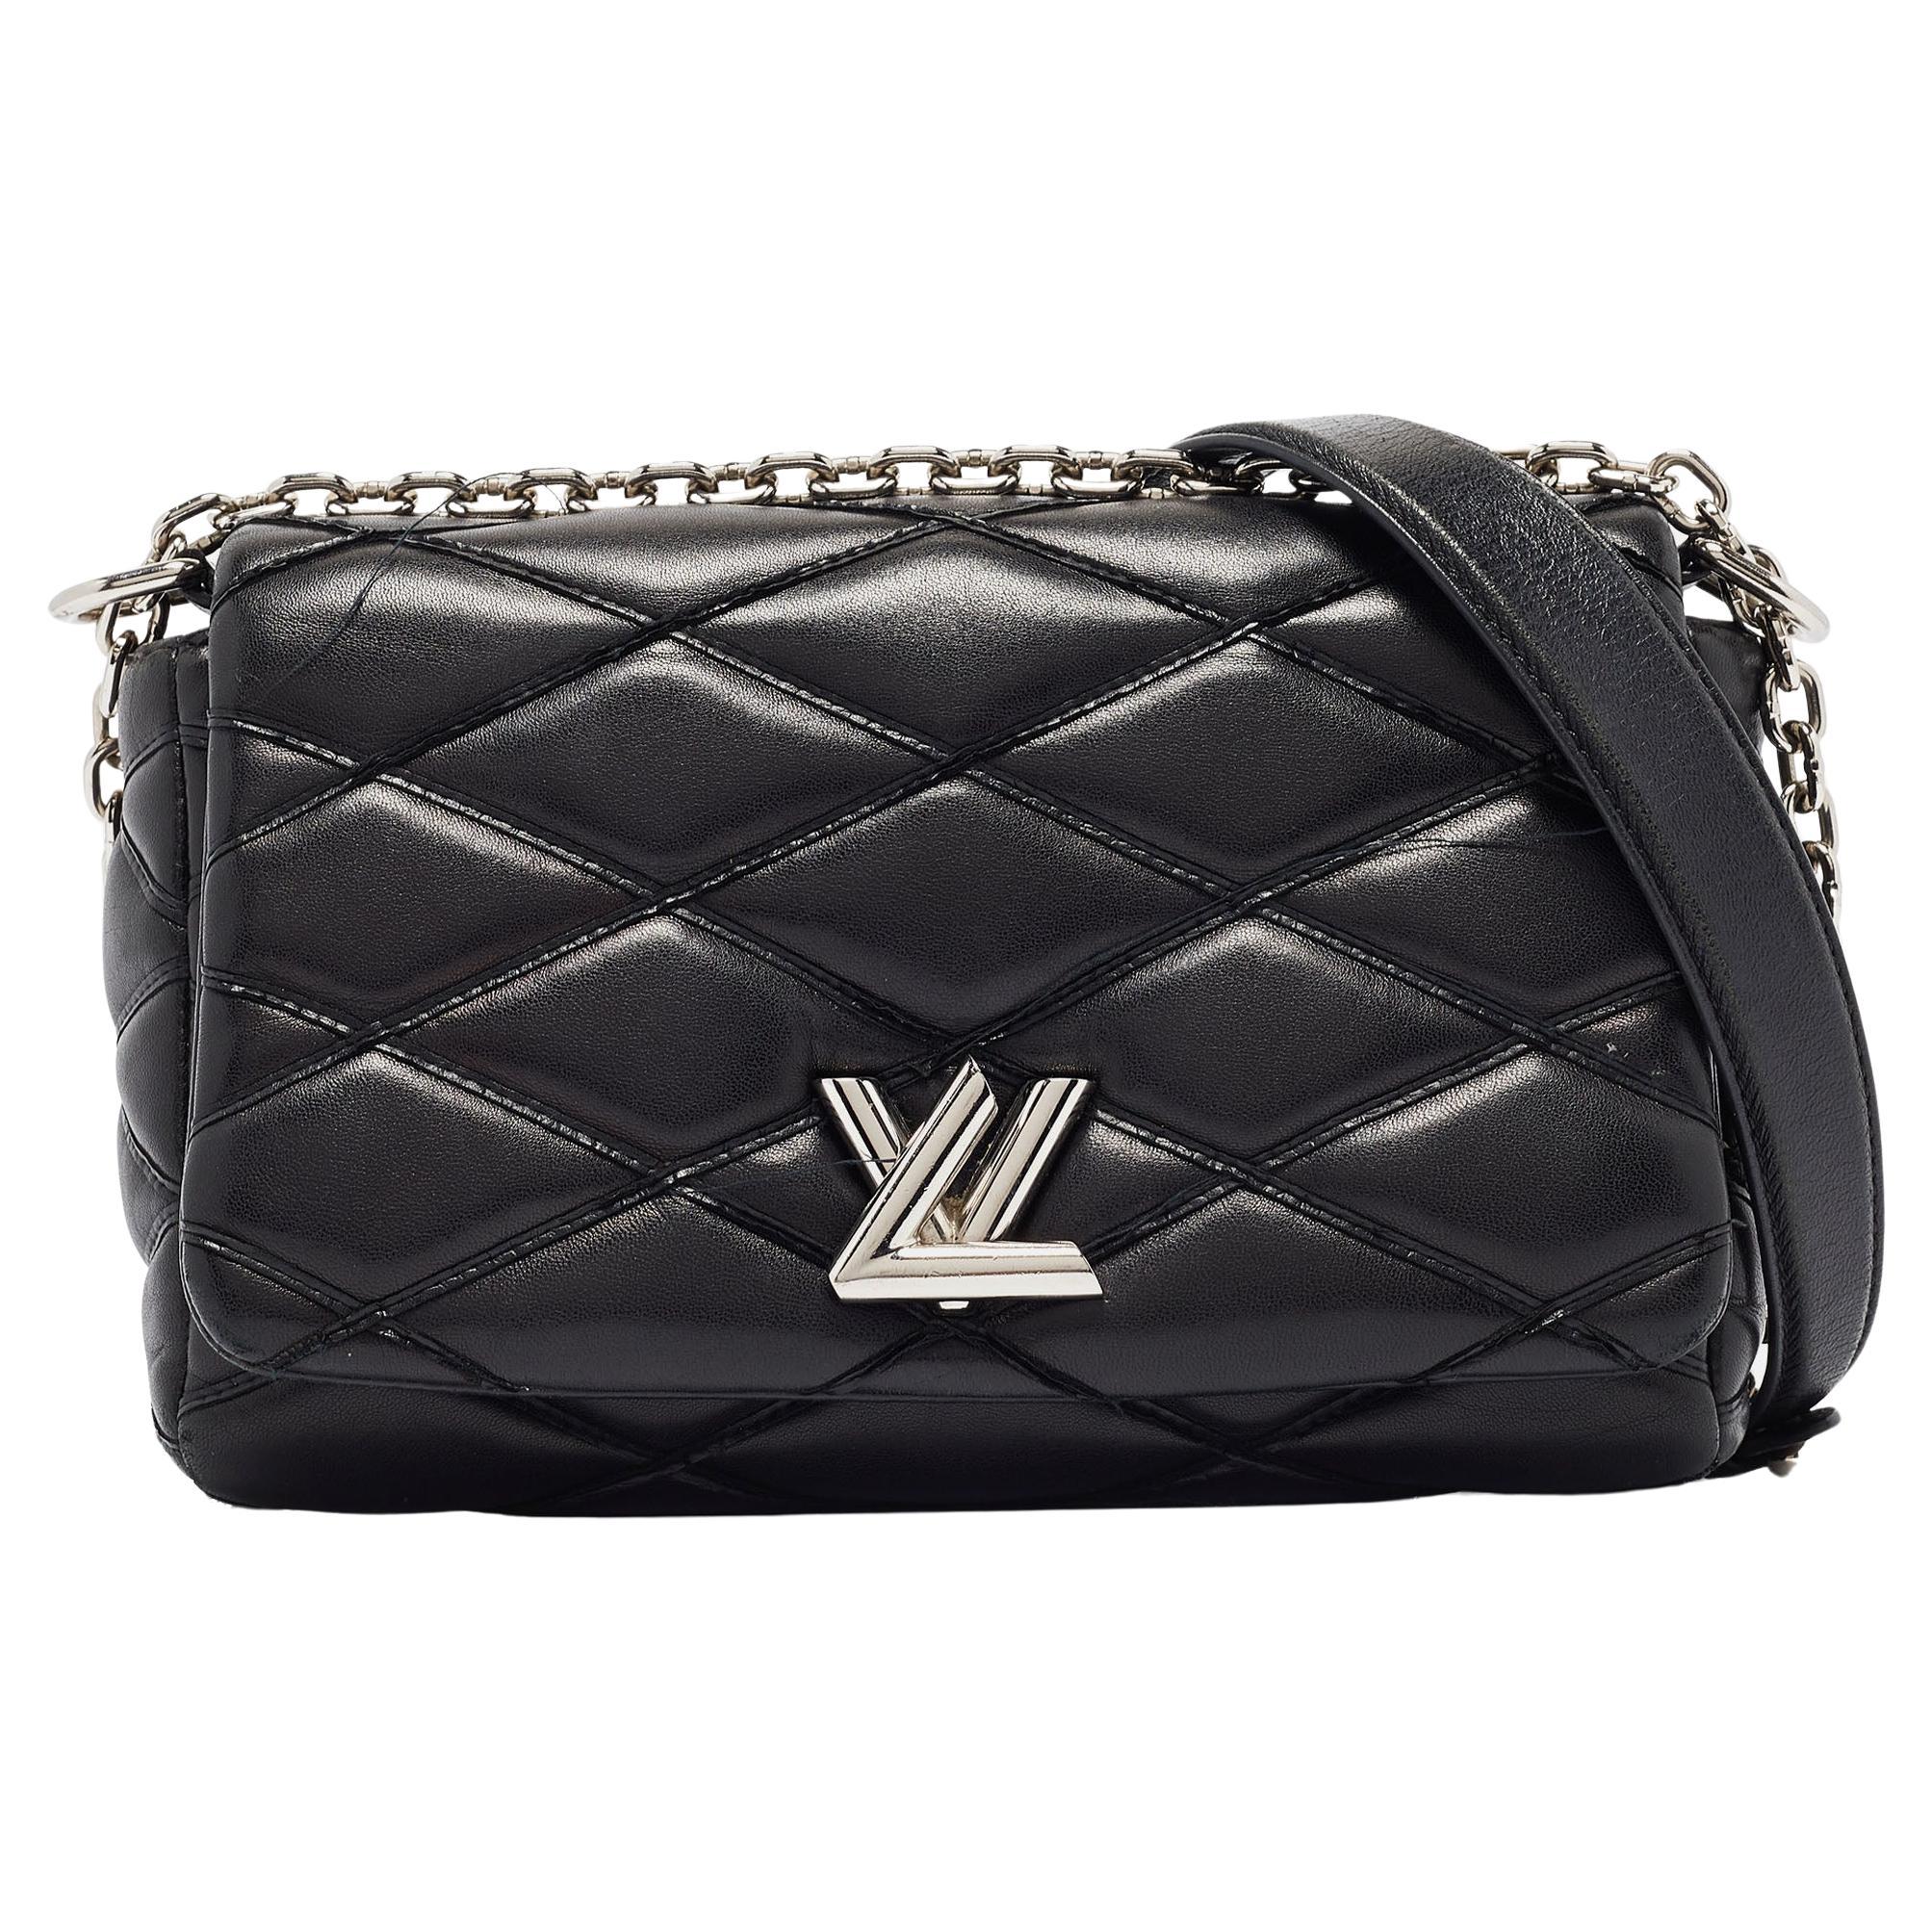 Louis Vuitton - Sac en cuir noir Malletage GO-14 PM en vente